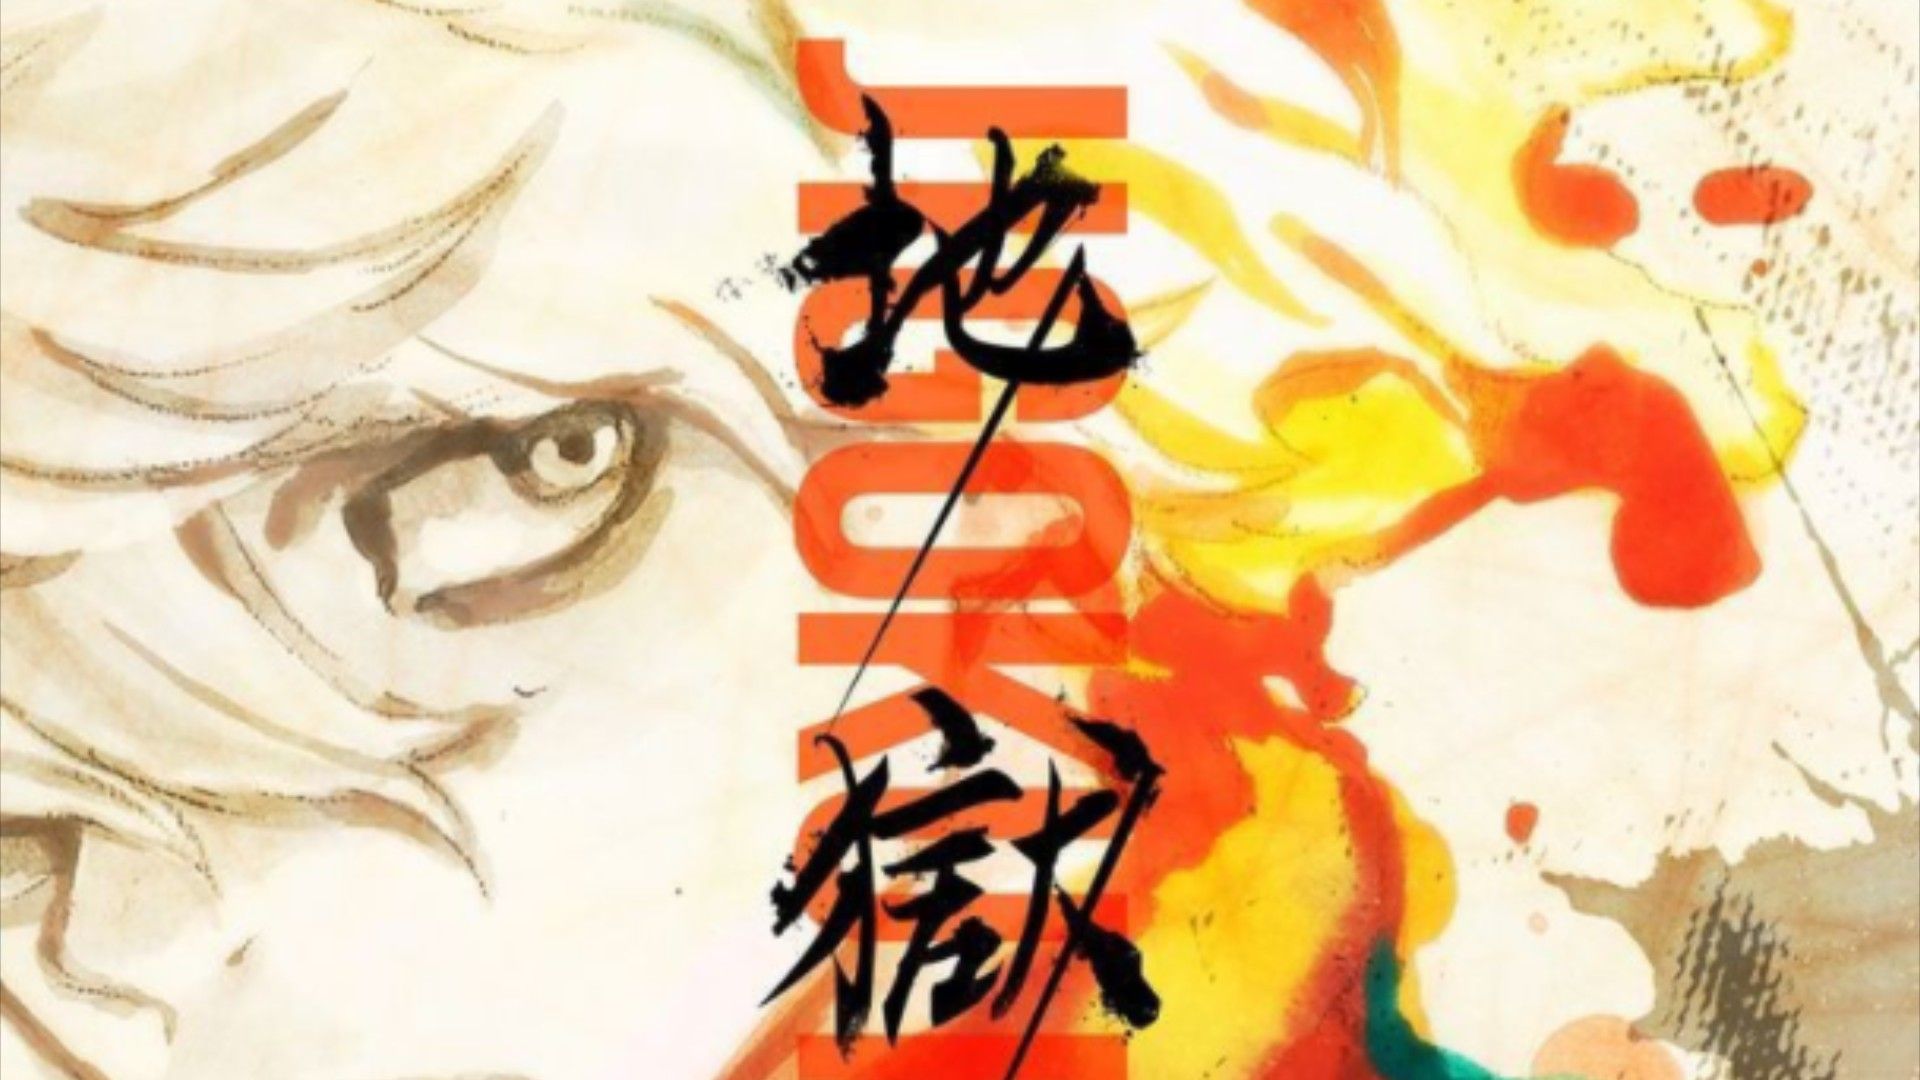 Subtitles Hell's Paradise: Jigokuraku Weak and Strong - subtitles english  1CD srt (eng)